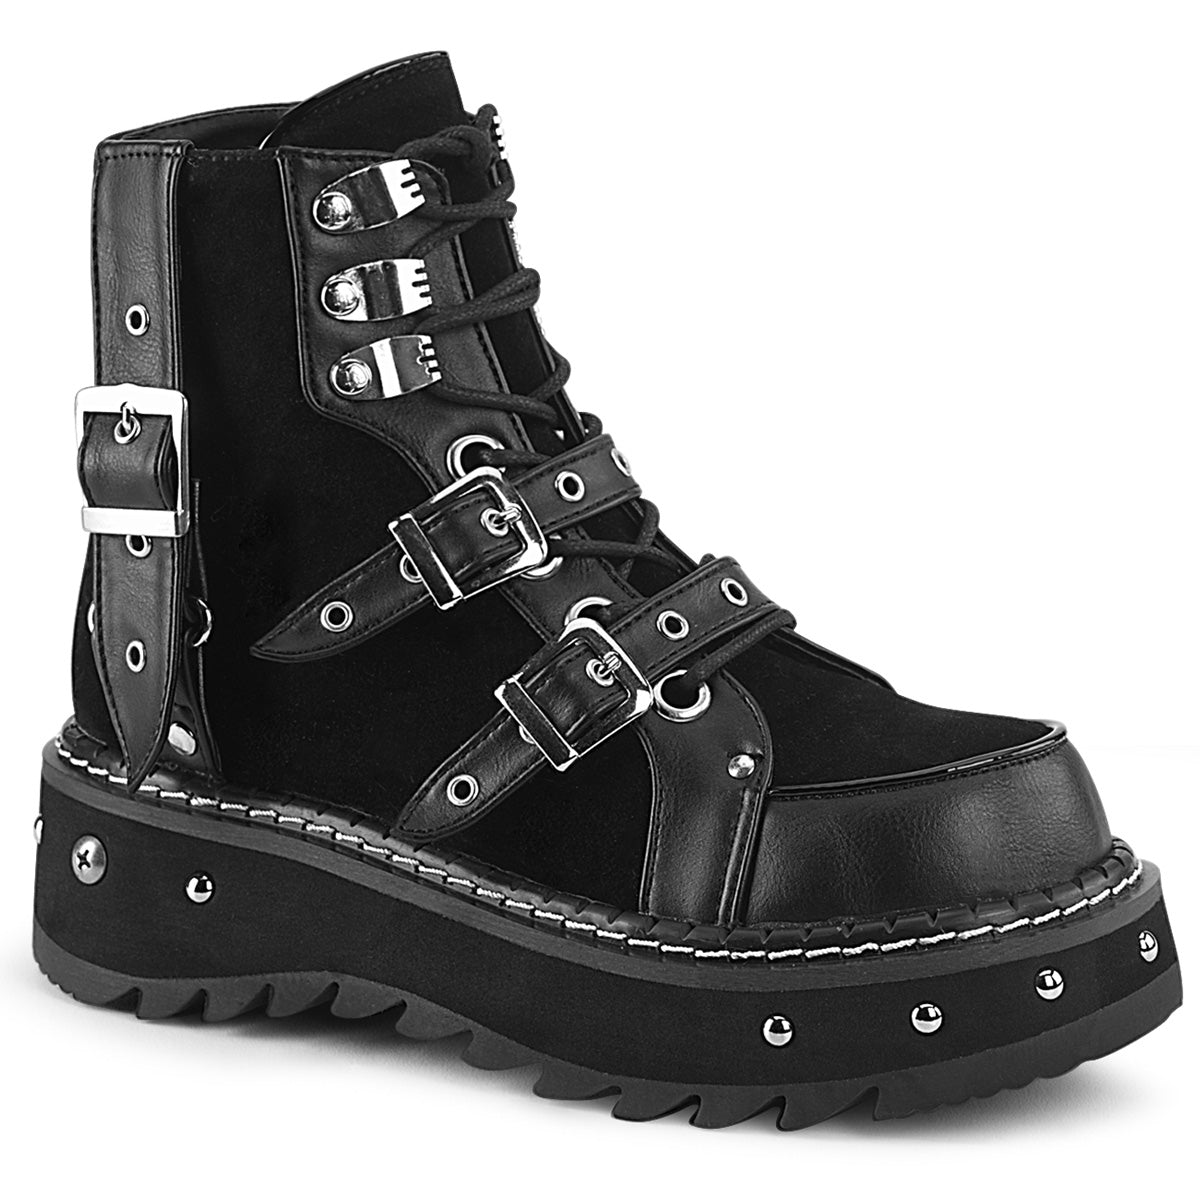 LILITH-278 Black Vegan Leather-Vegan Suede Ankle Boot Demonia